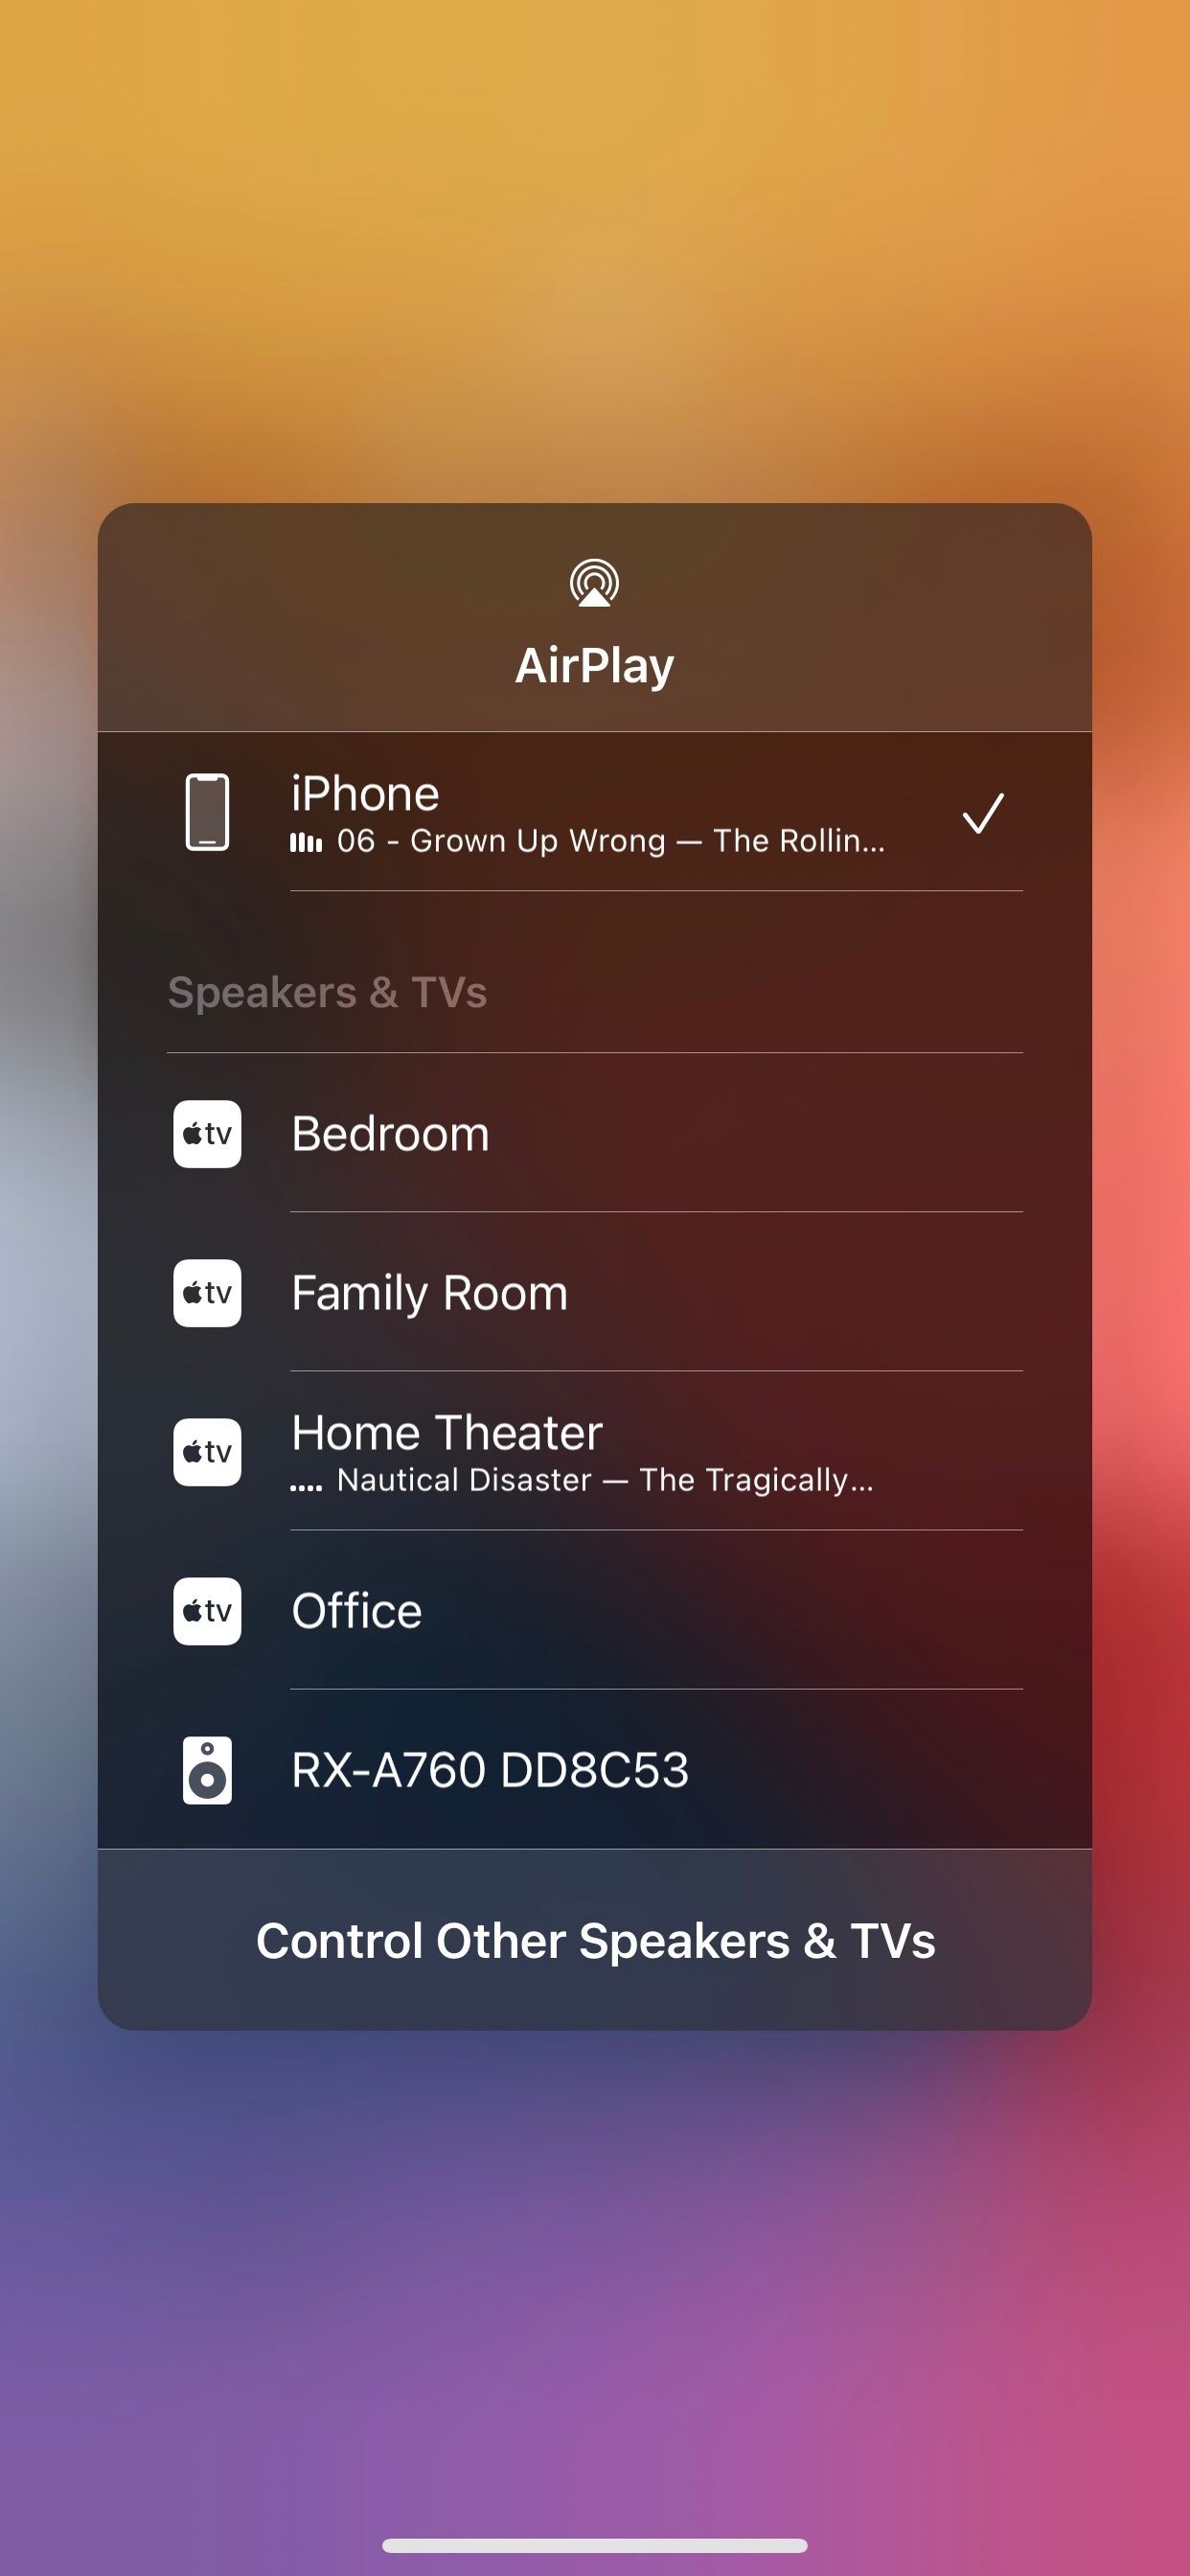 is Sonos showing as iphone on lockscreen. | Sonos Community